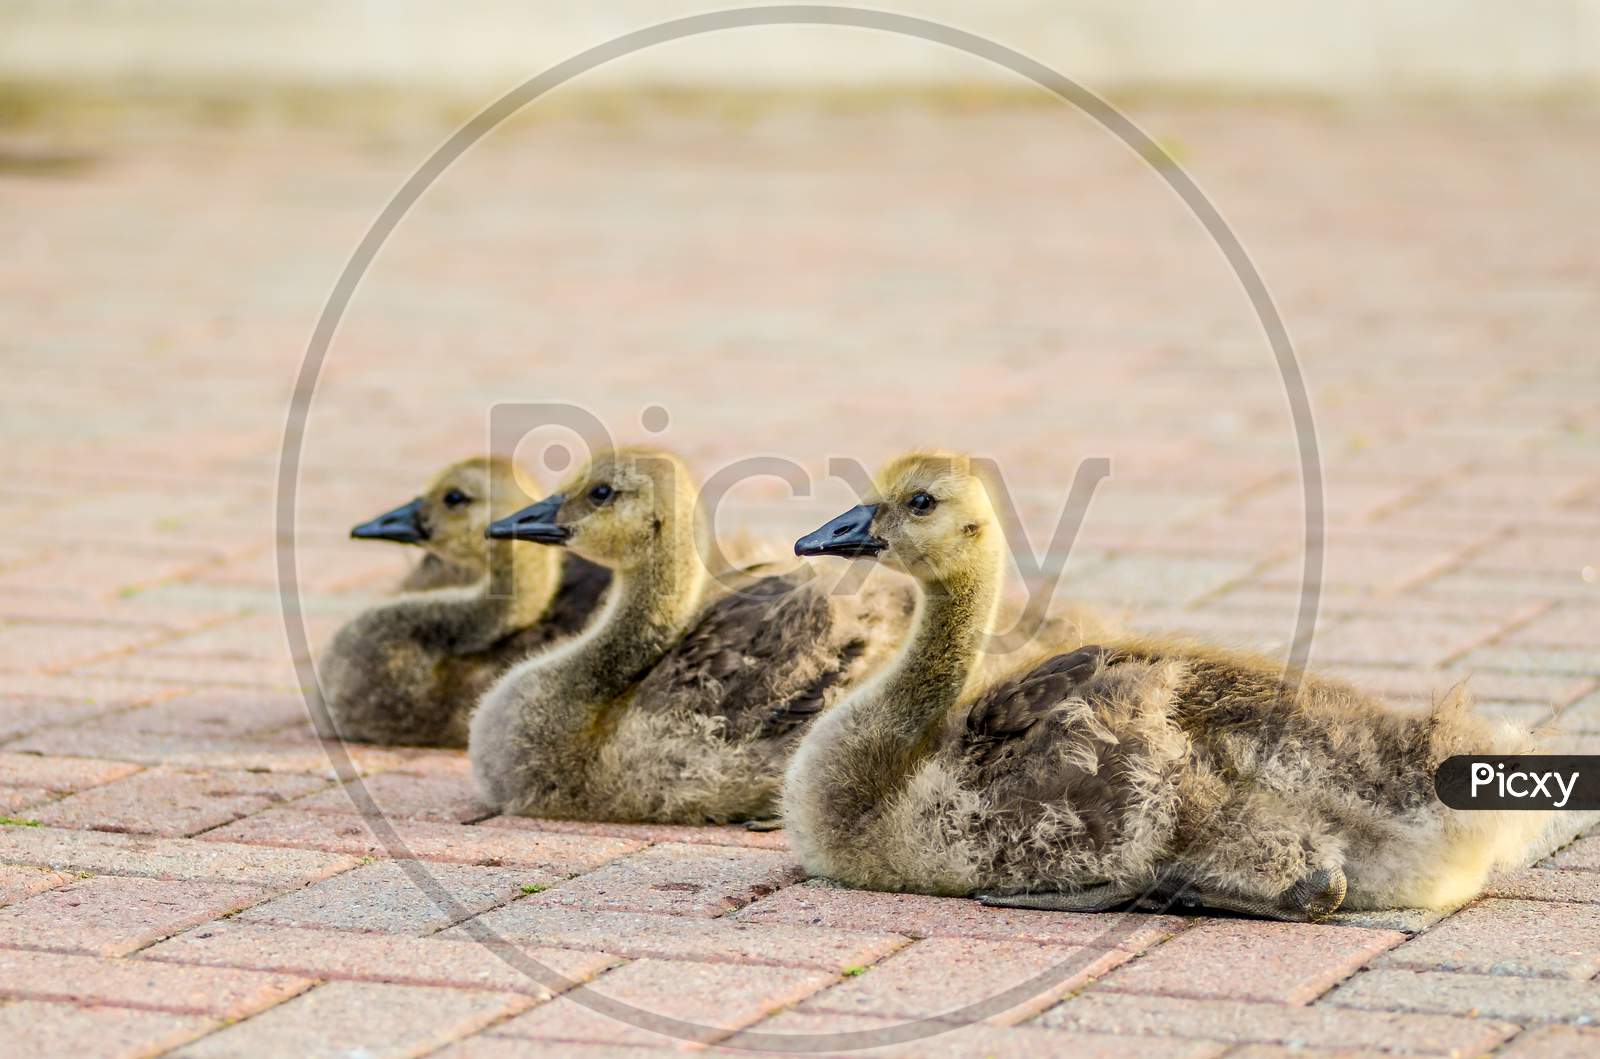 Three baby ducks sitting on a floor